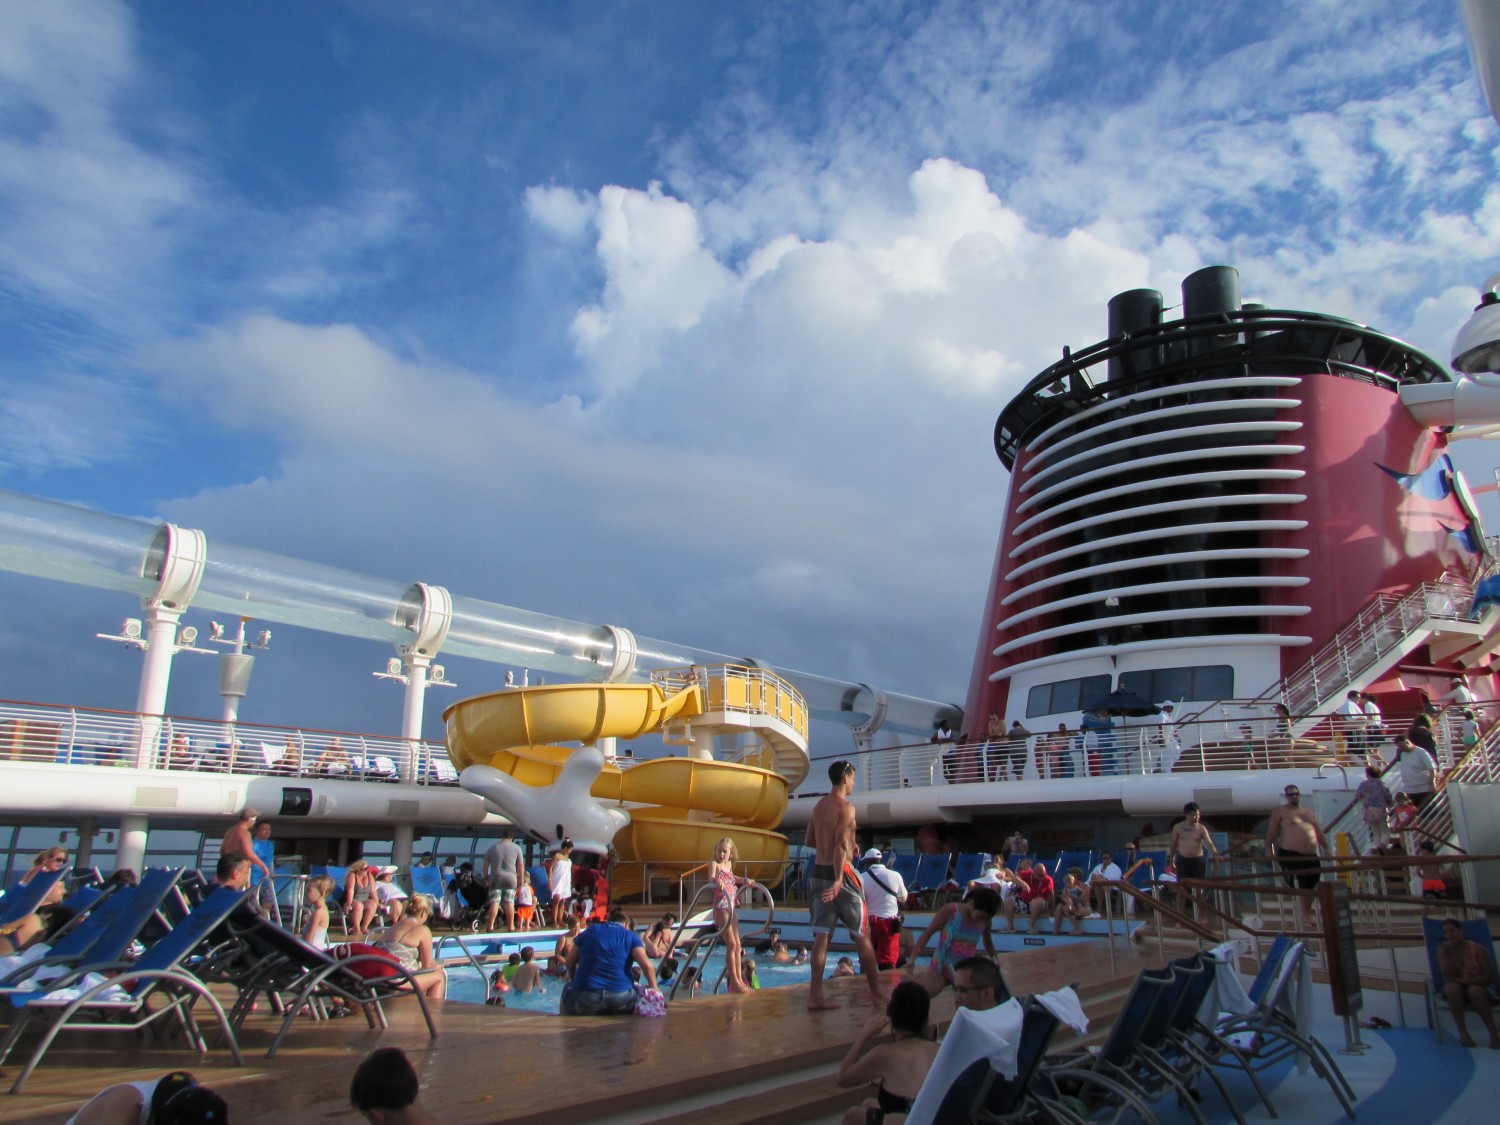 DIsney Cruise Line Review sparkleshinylove